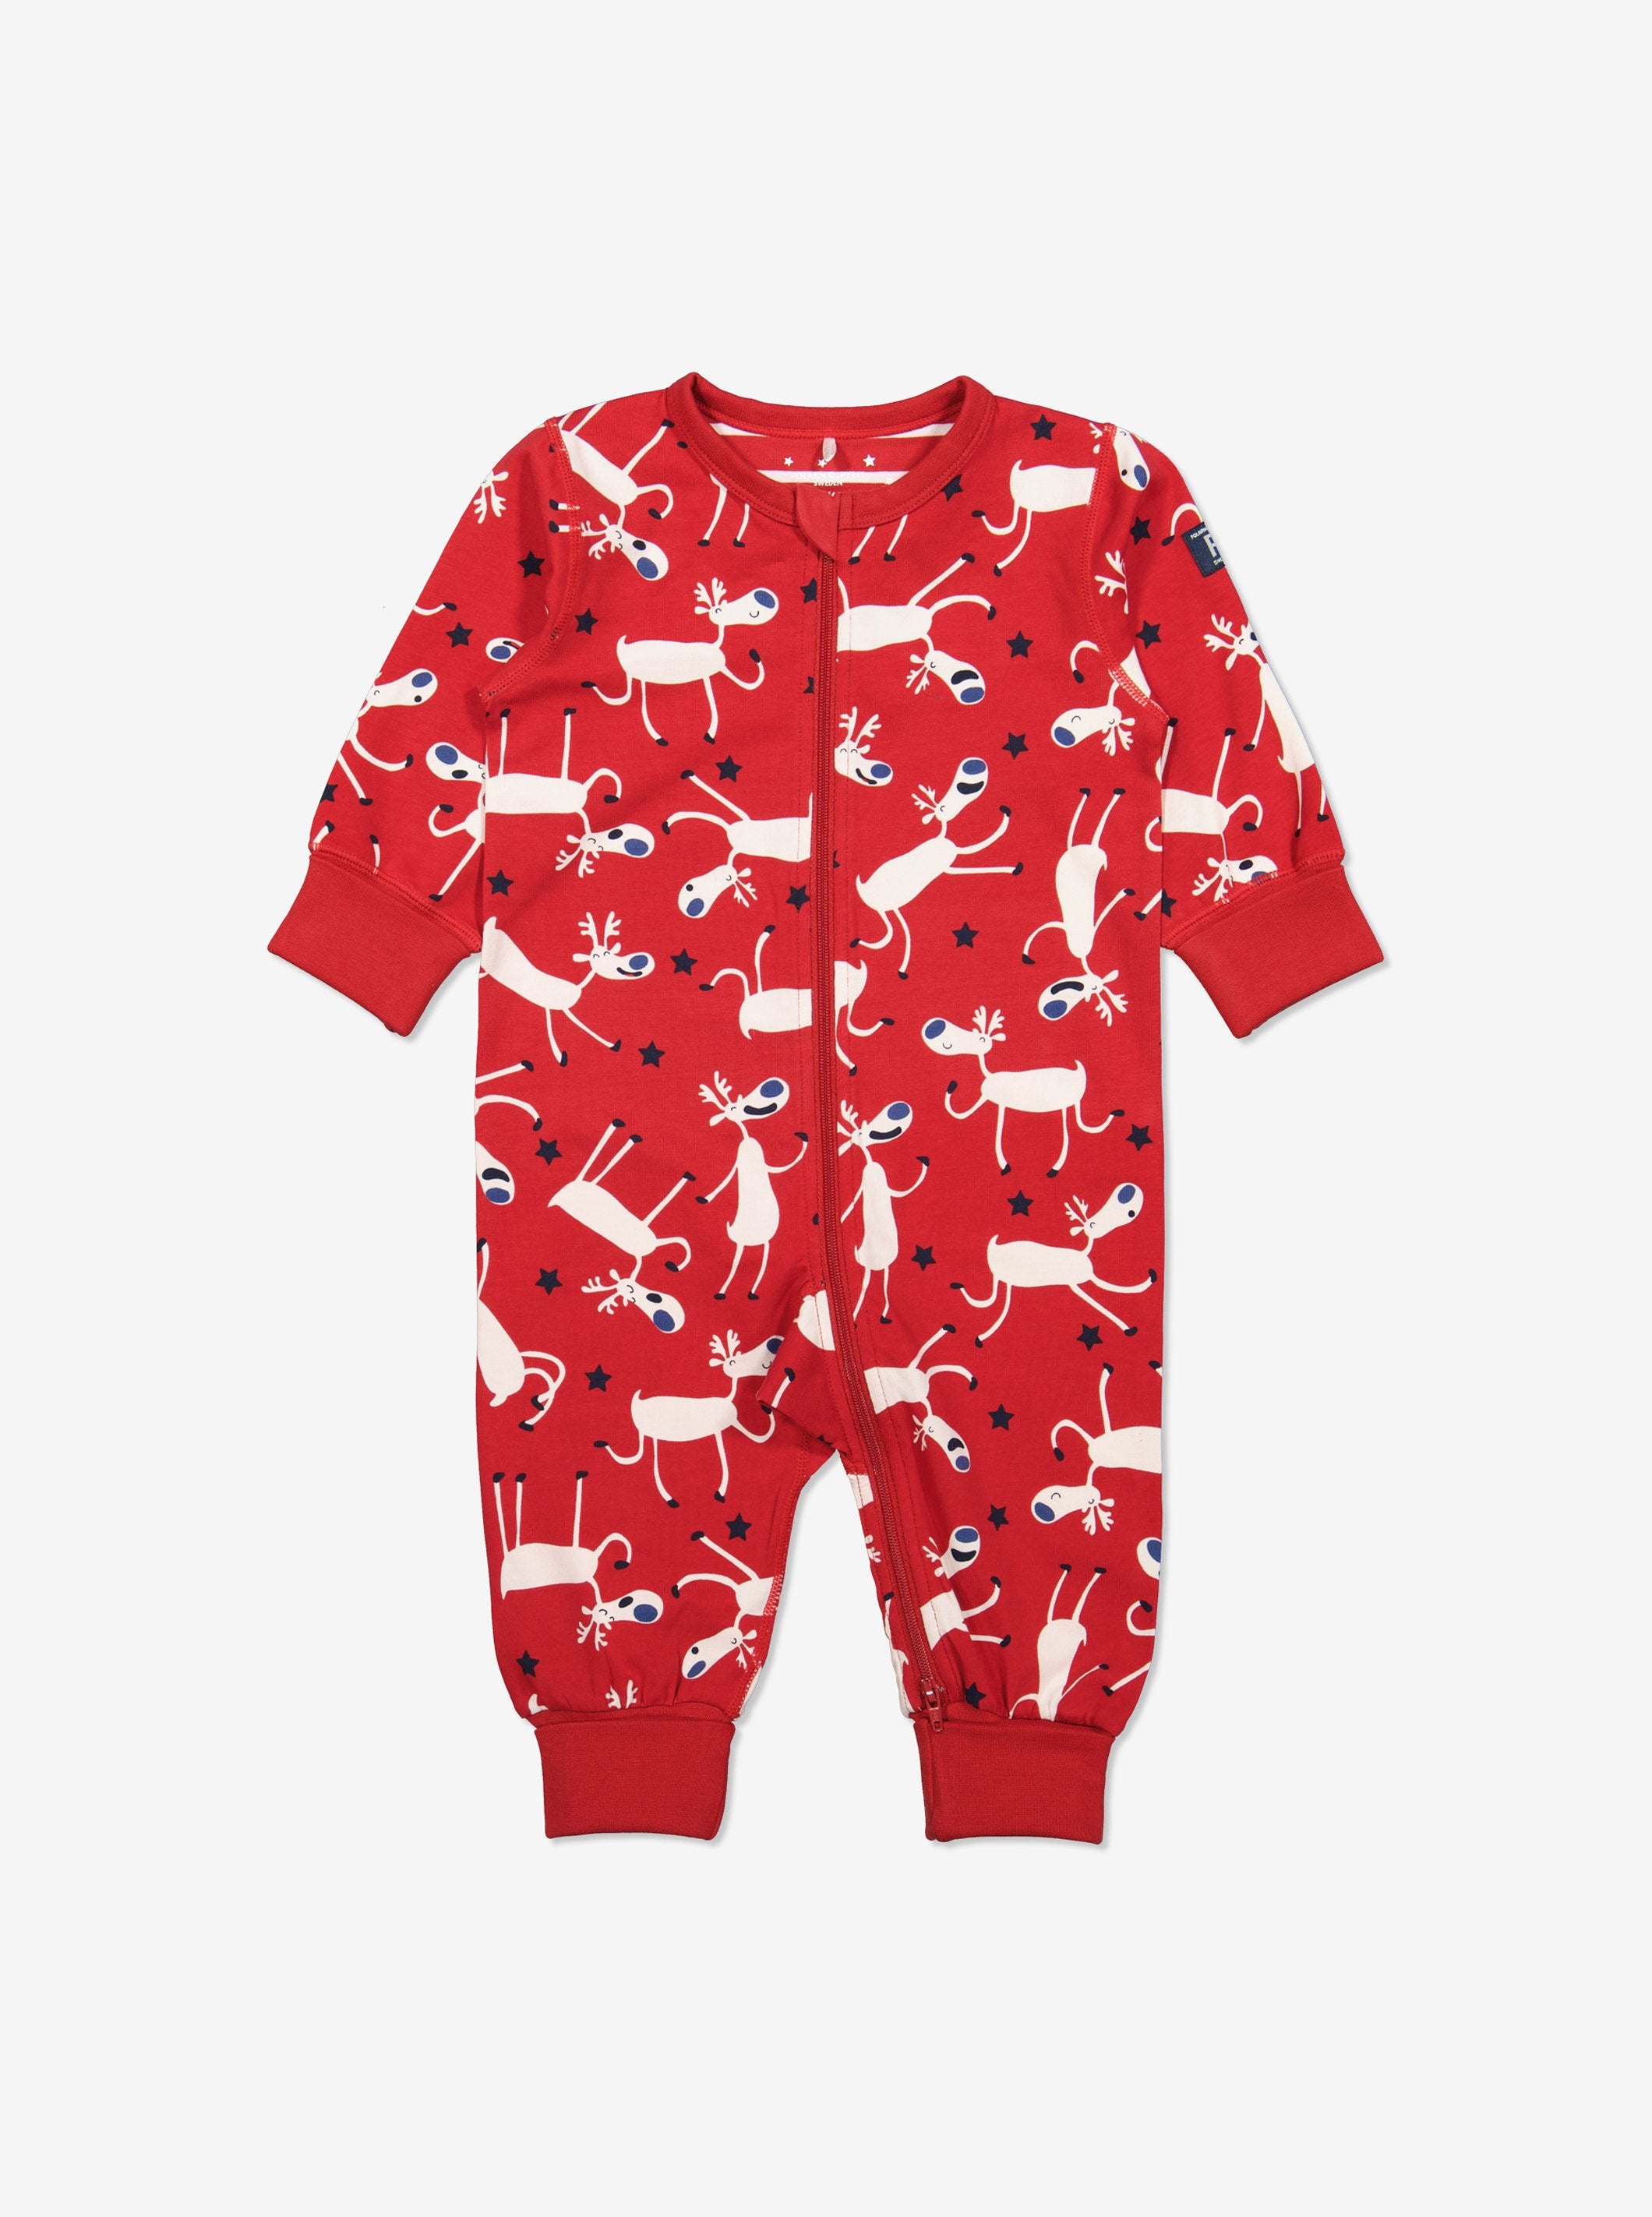 Reindeer Print Kids Sleepsuit